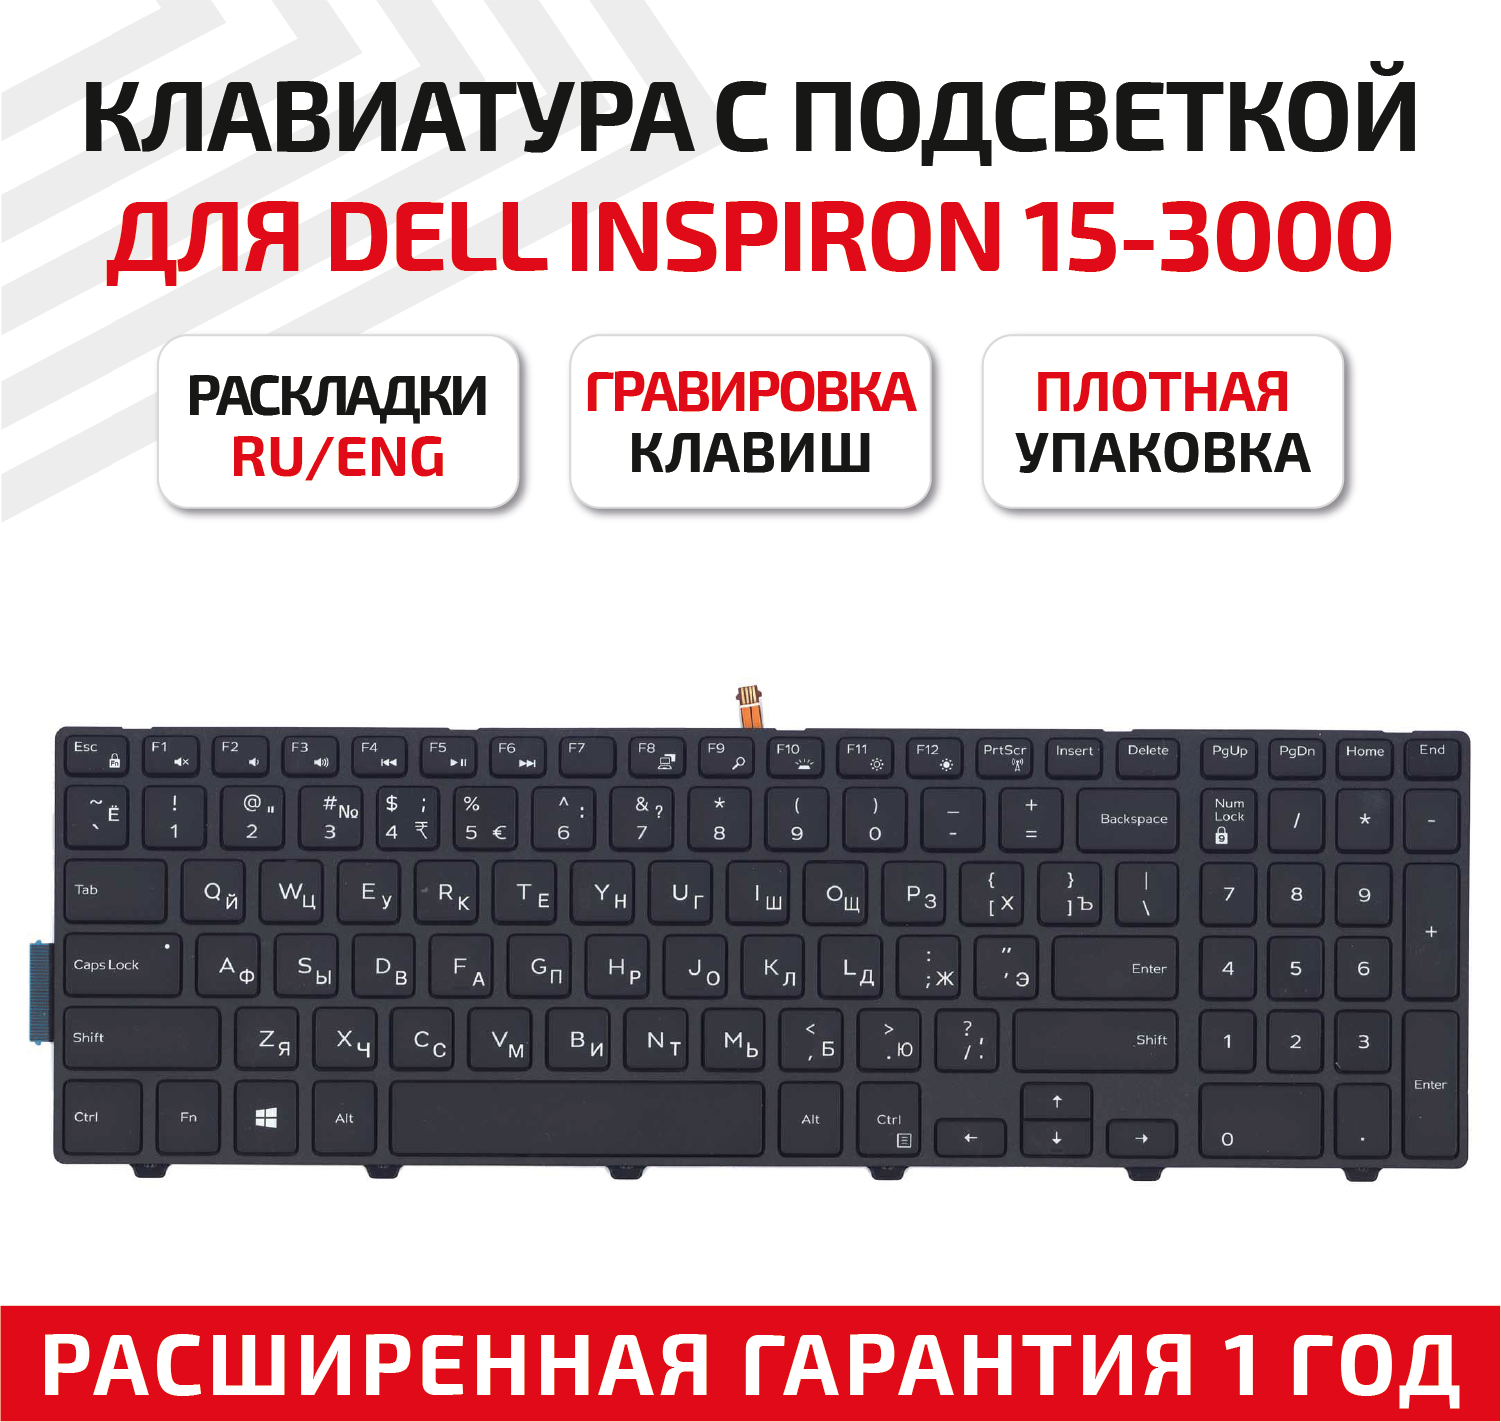 Клавиатура (keyboard) 0KK7X9 для ноутбука Dell Inspiron 15-3000, 15-5000, 17-5000, 15-3541, 15-3542, Vostro 3546, 15-3000, черная с подсветкой